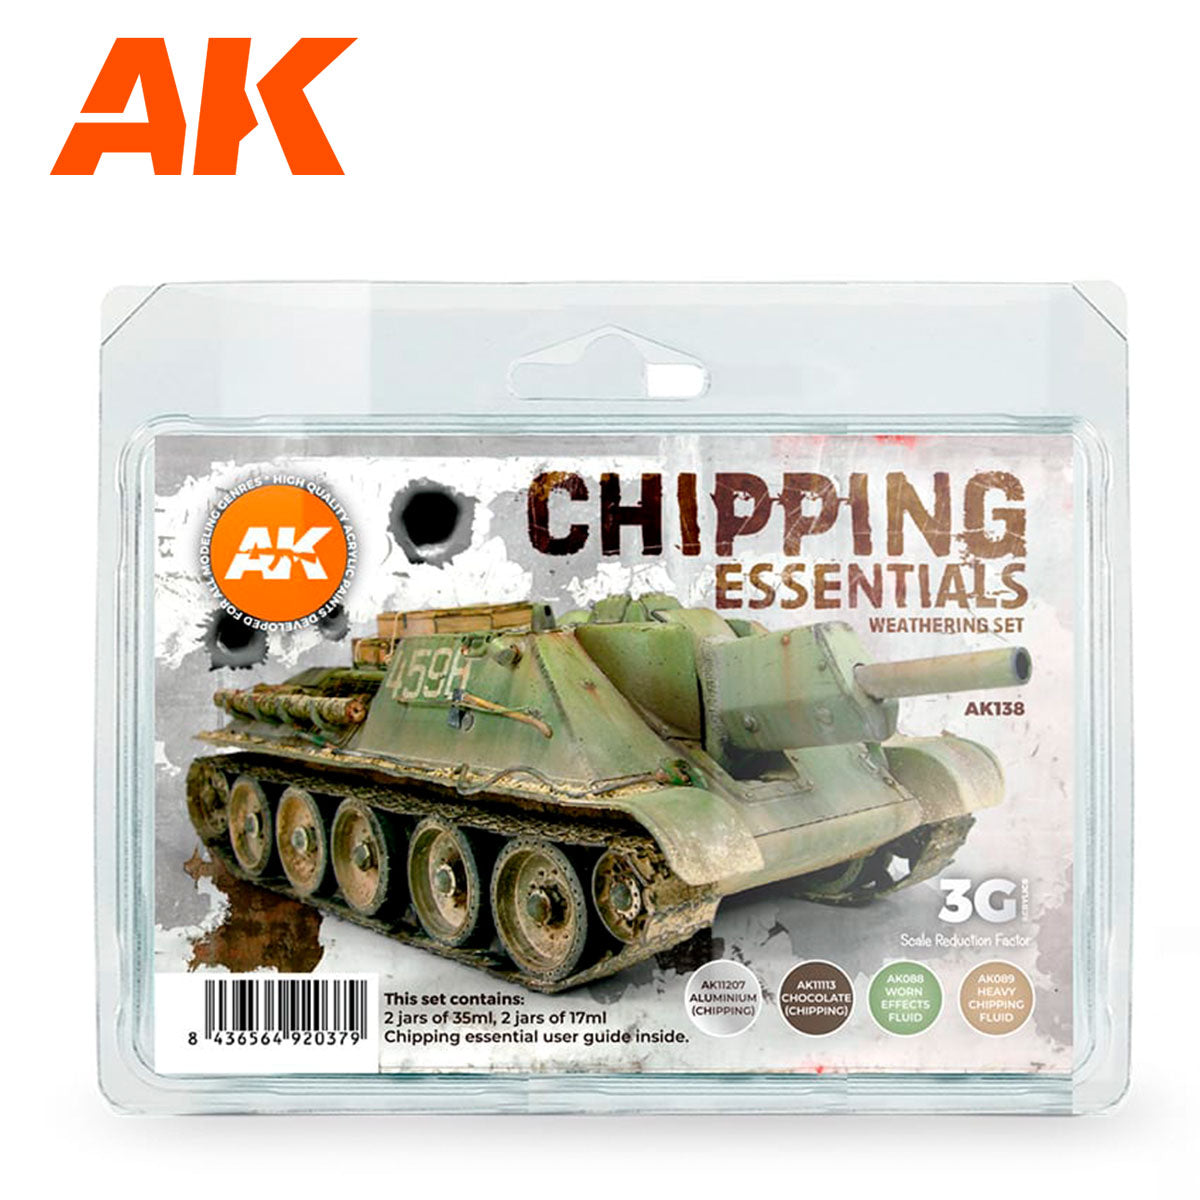 AK Interactive Chipping Essentials Weathering Set